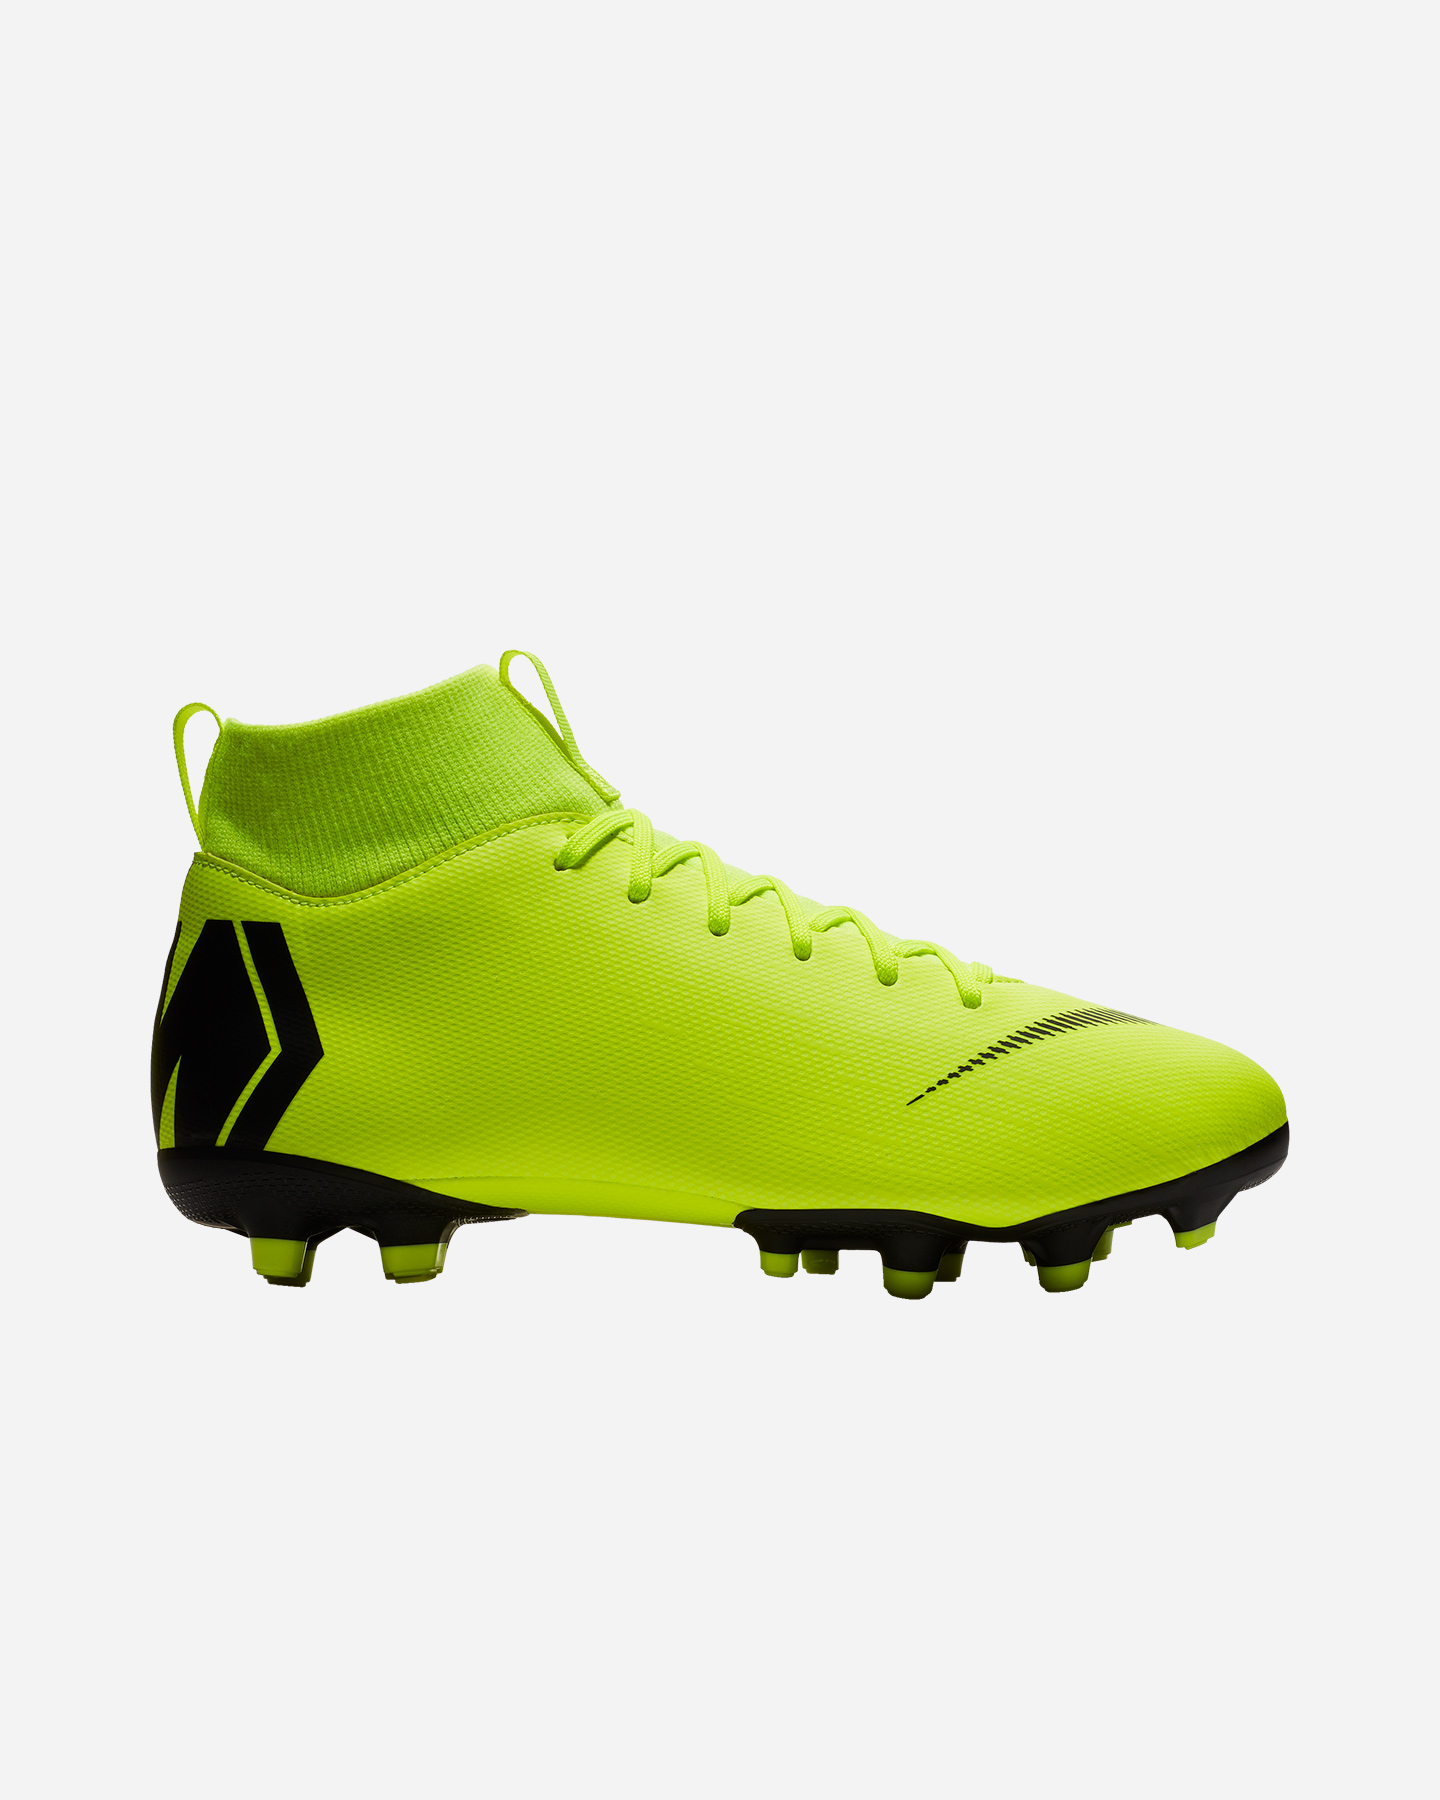 Nike Soccer Shoes Cheap Nike Mercurial Superfly V Ronalro